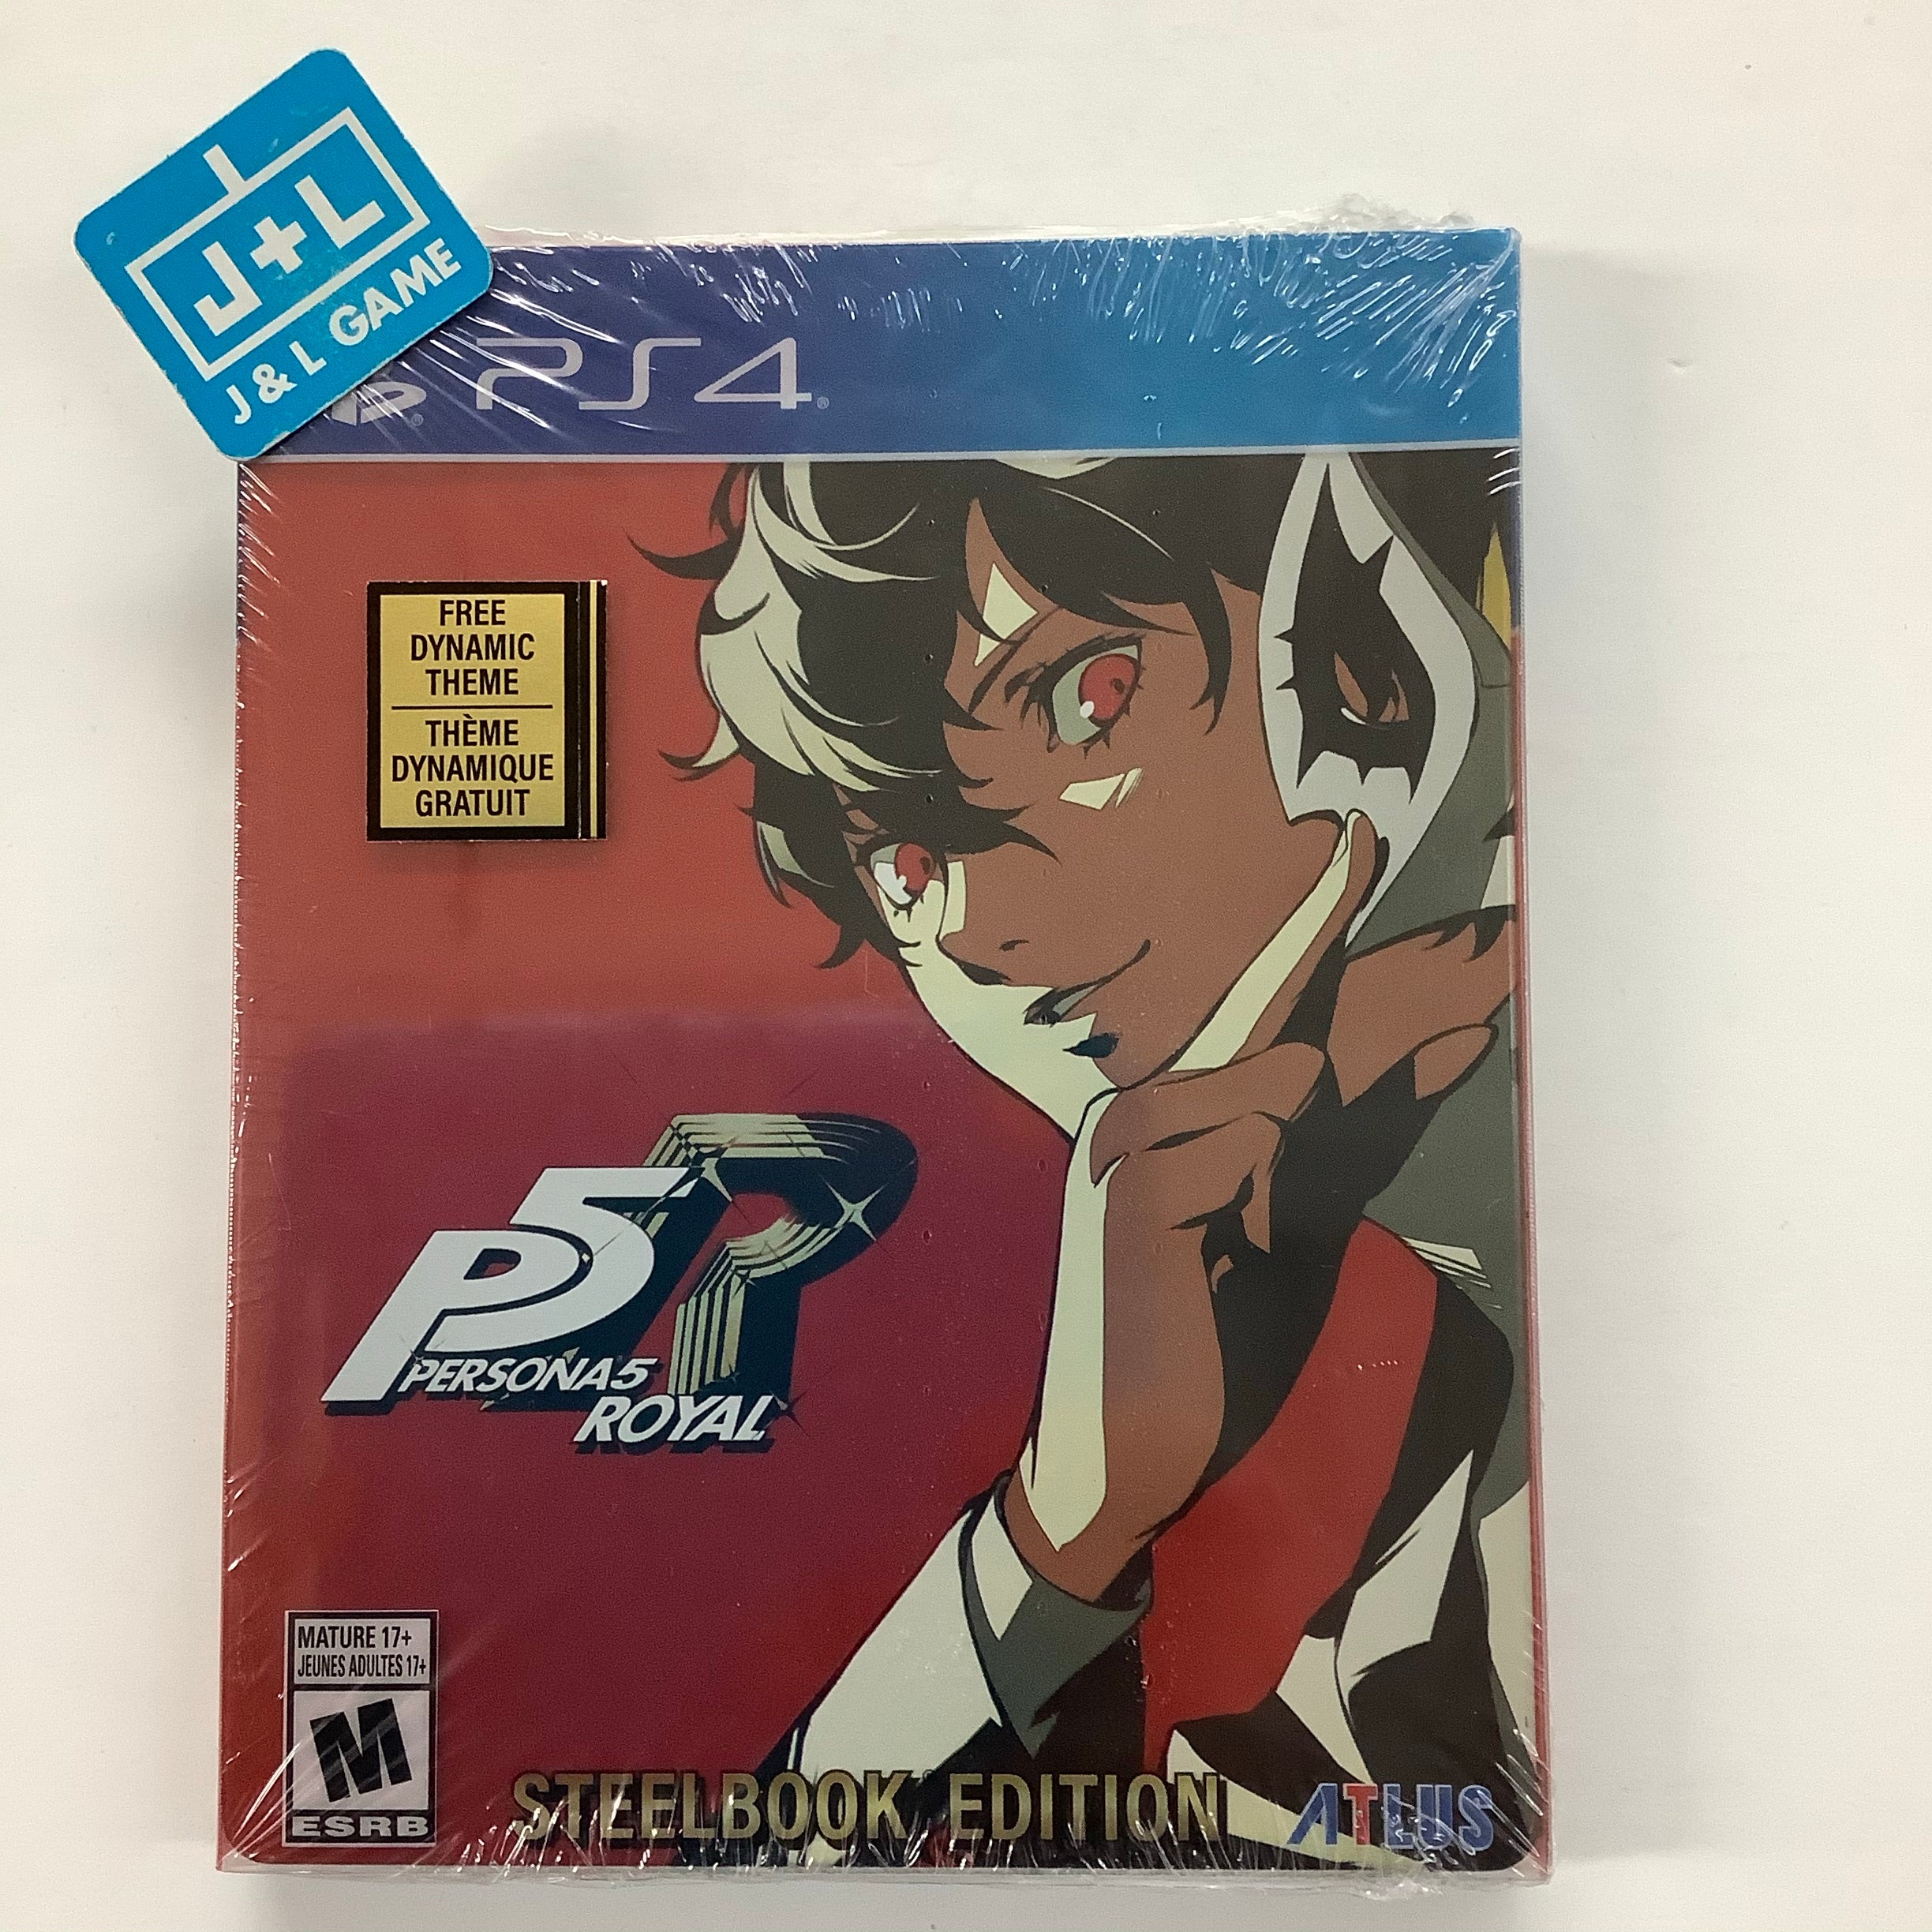 Persona 5 Royal: Steelbook Launch Edition - (PS4) PlayStation 4 Video Games SEGA   